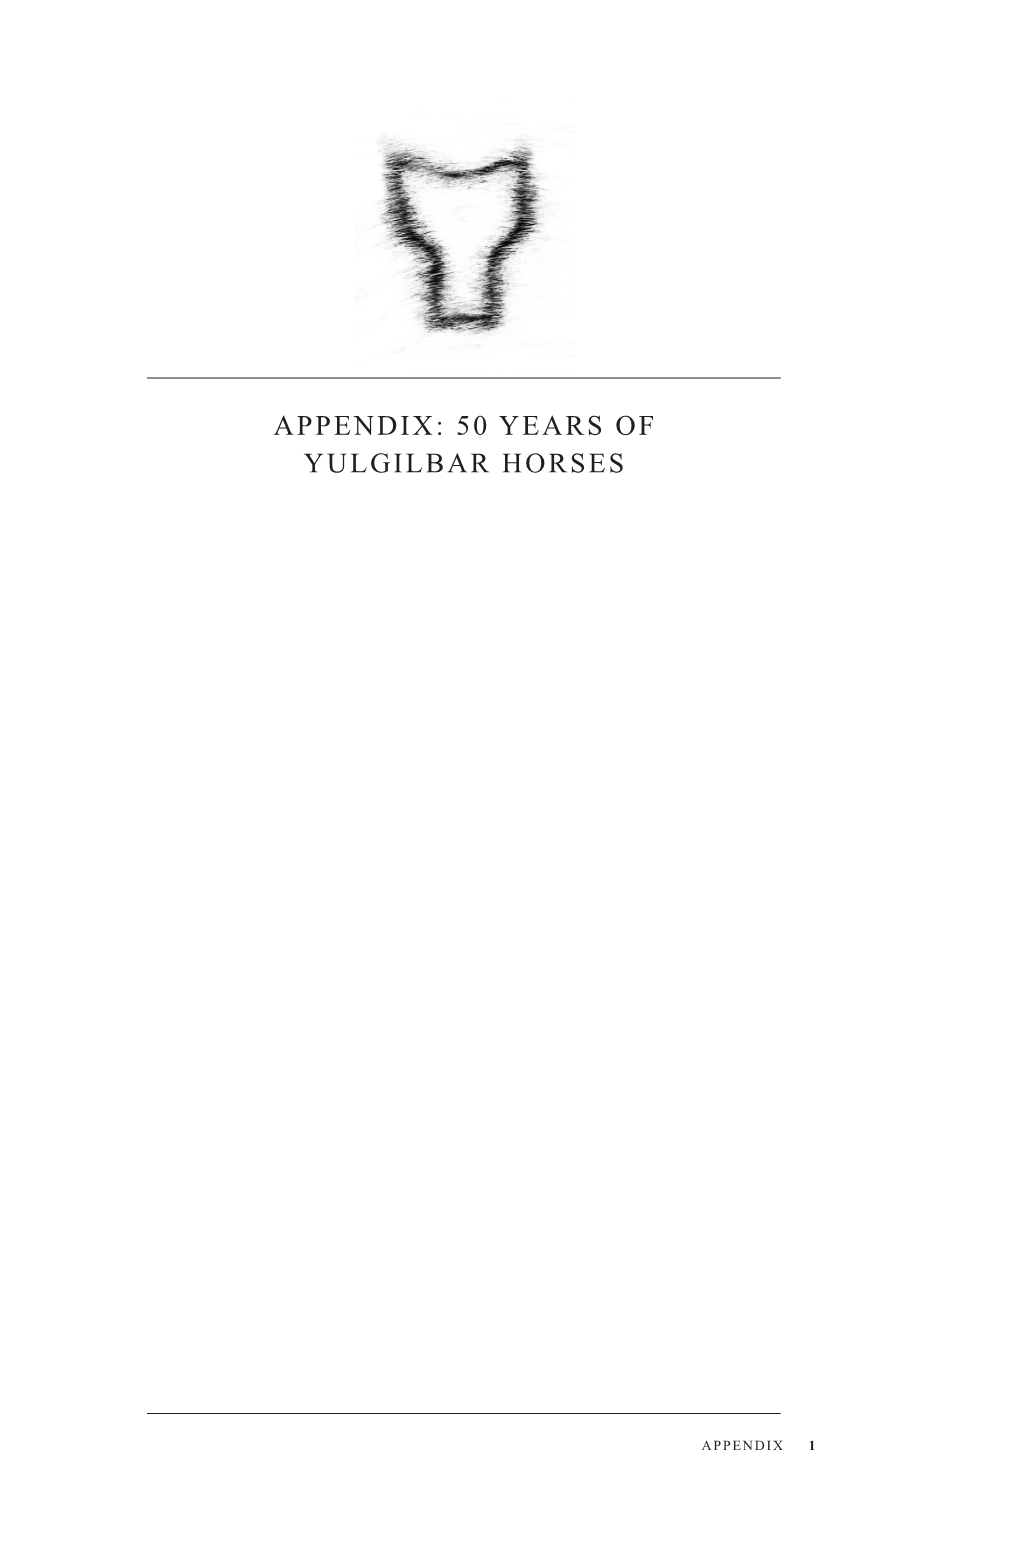 50 Years of Yulgilbar Horses